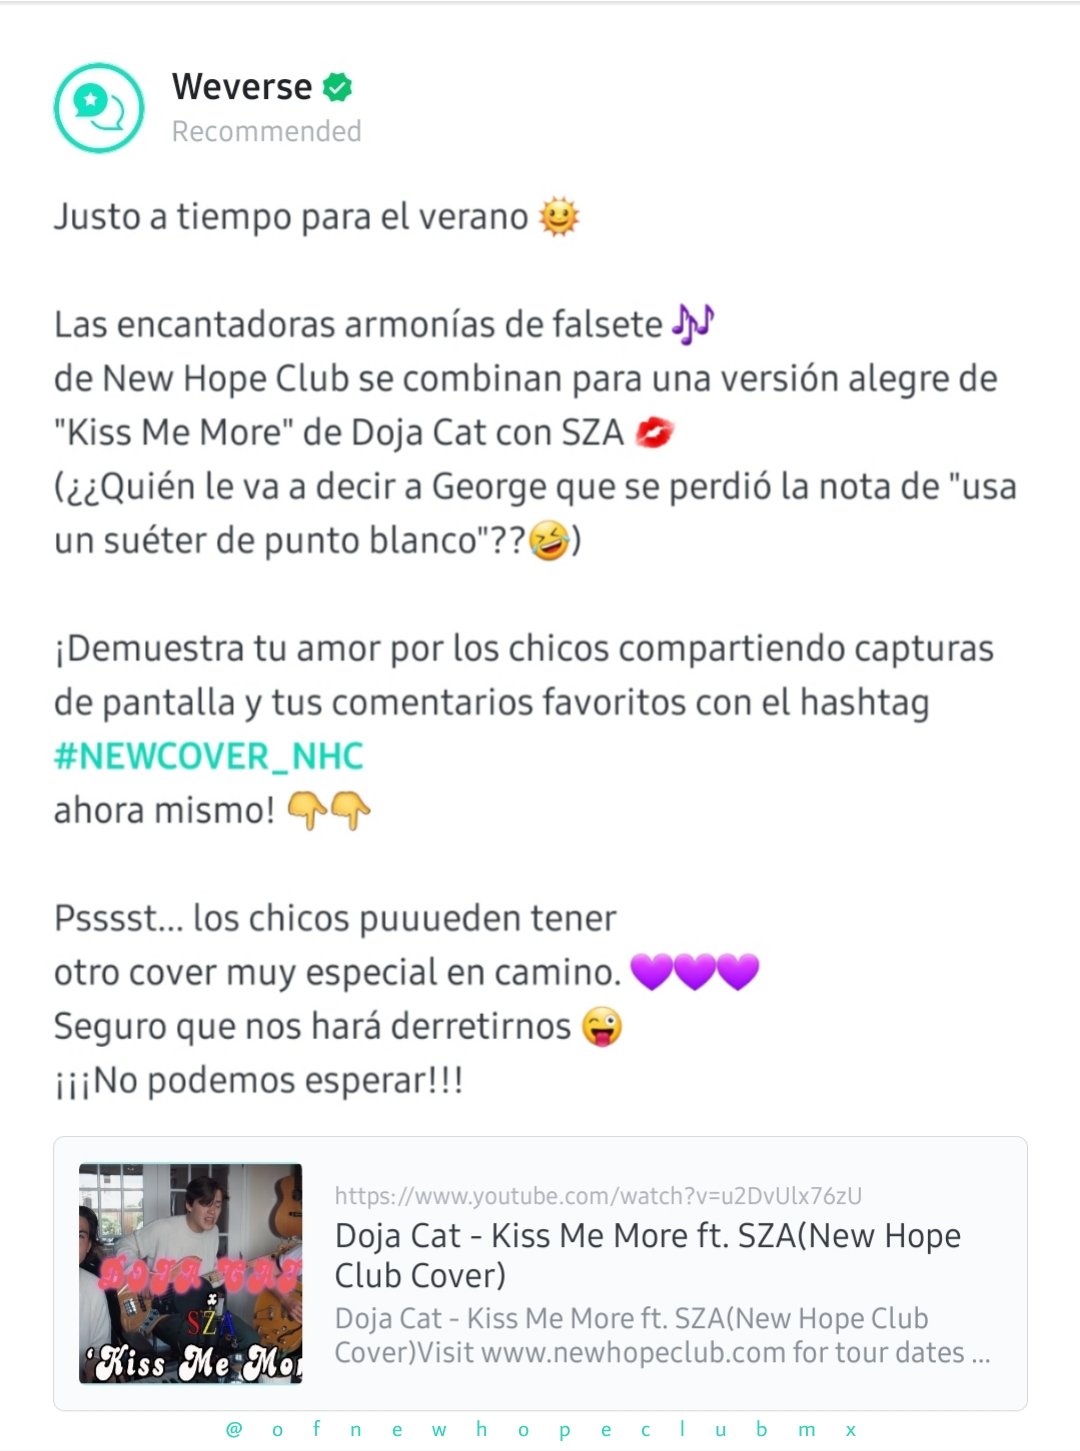 New Hope Club México (@OfNewHopeClubMx) / Twitter